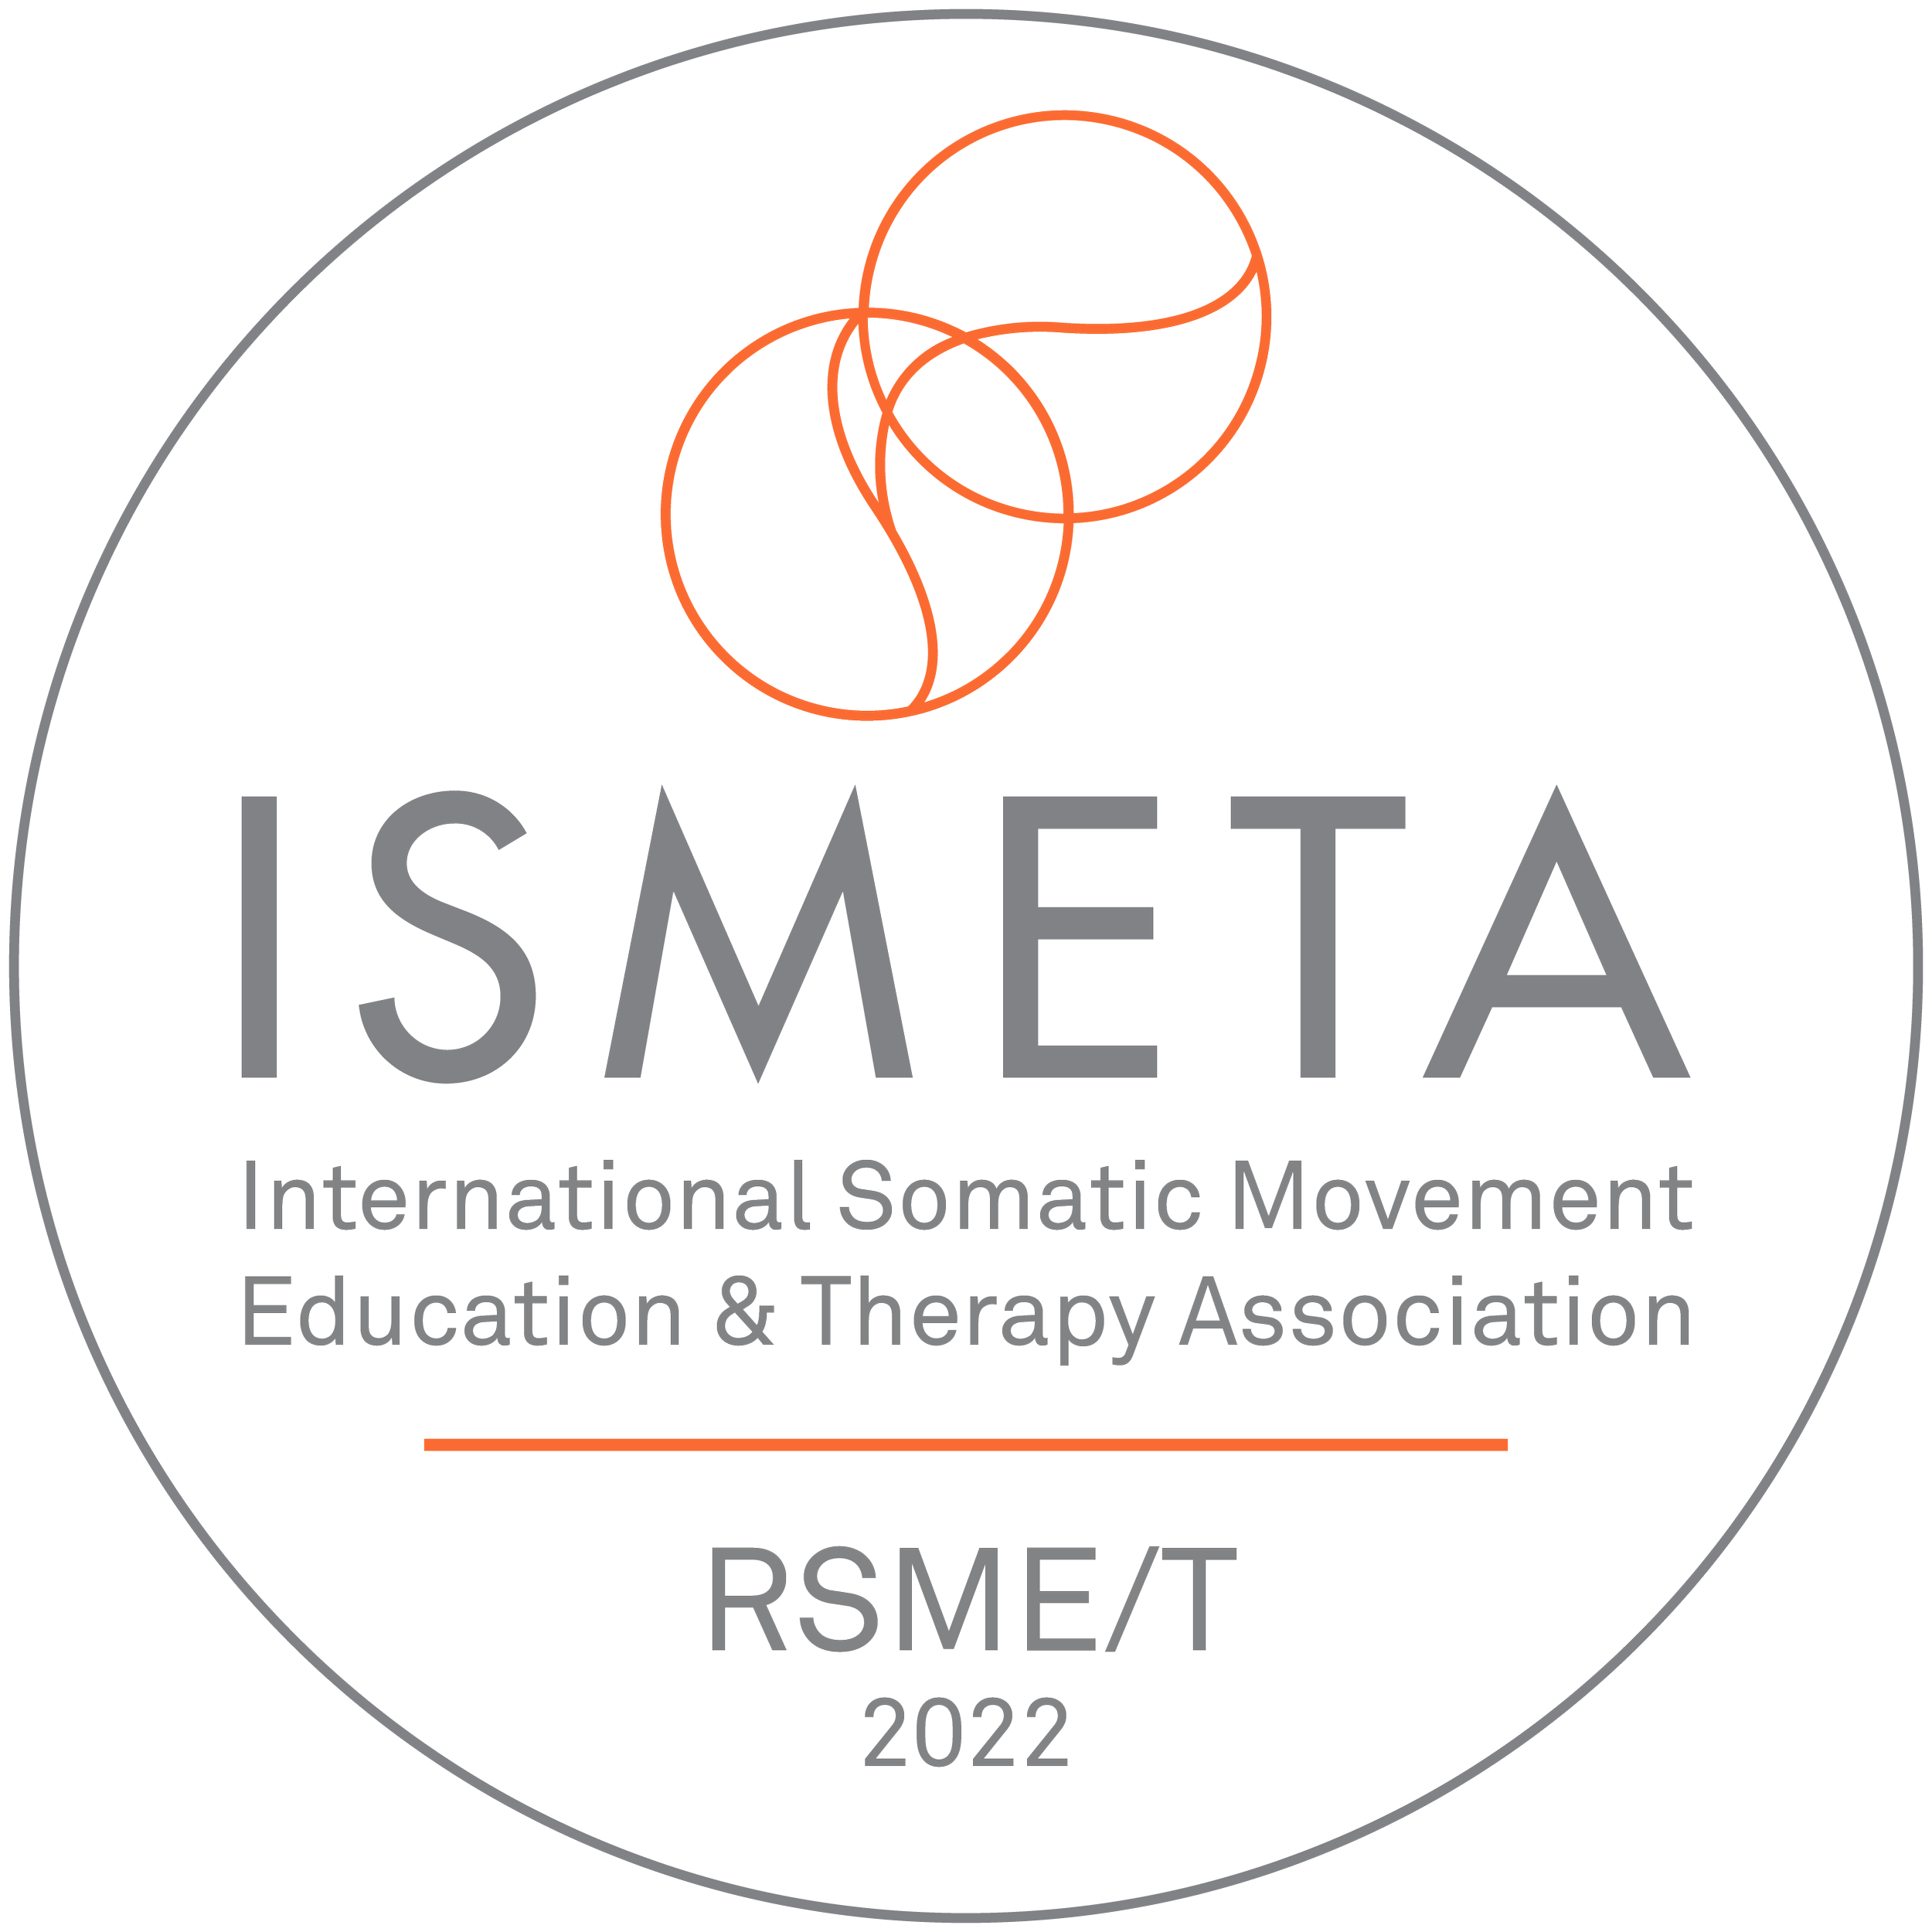 ISMETA_RSMEIT_2022_02.png